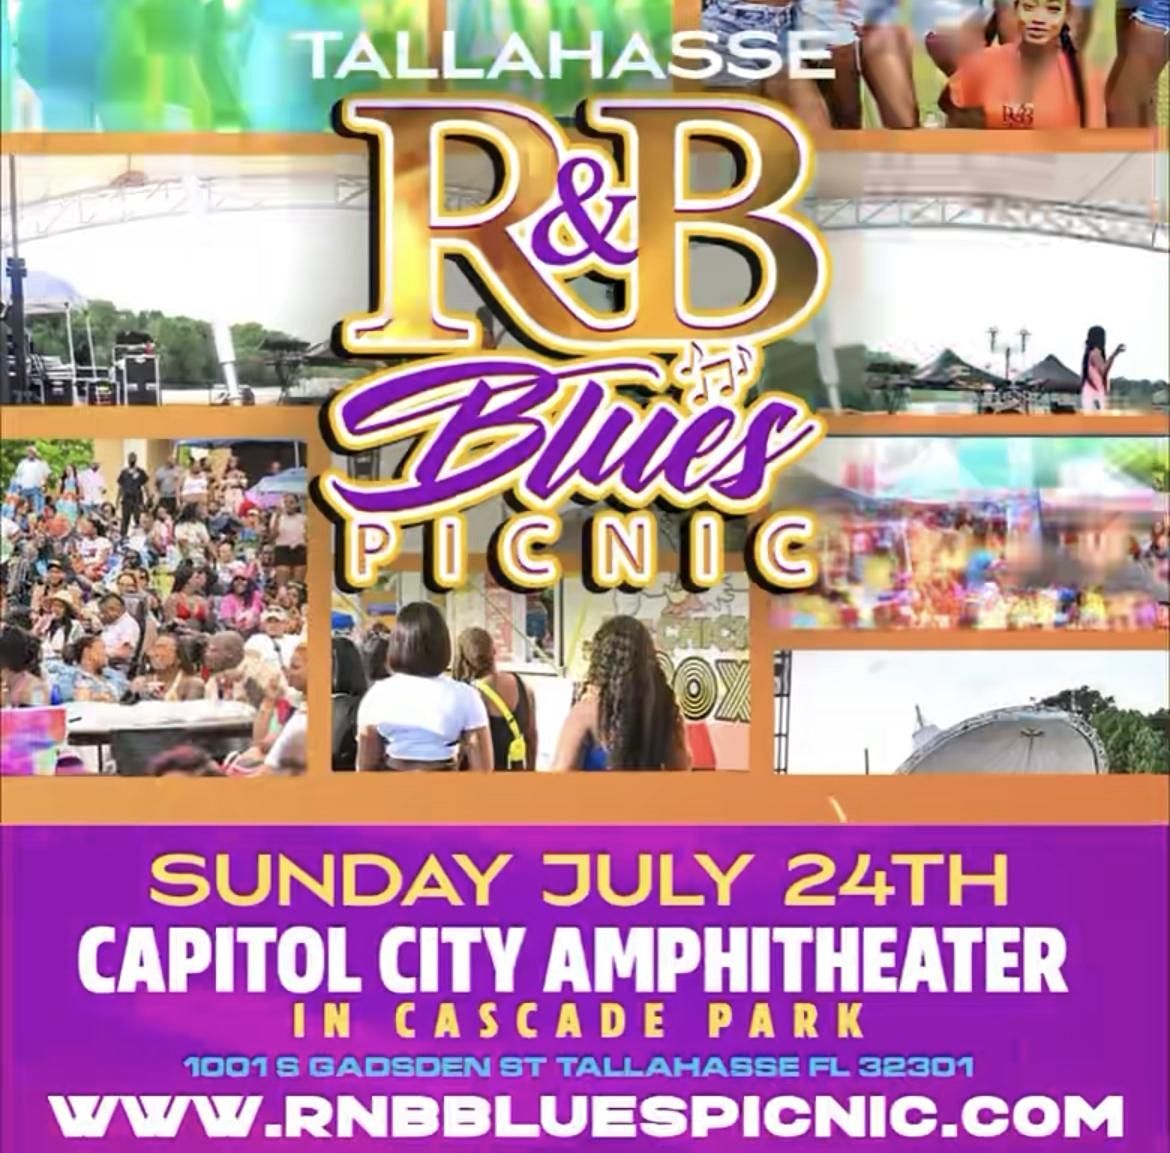 RNB BLUES PICNIC TALLAHASSEE Capital City Amphitheater, Tallahassee